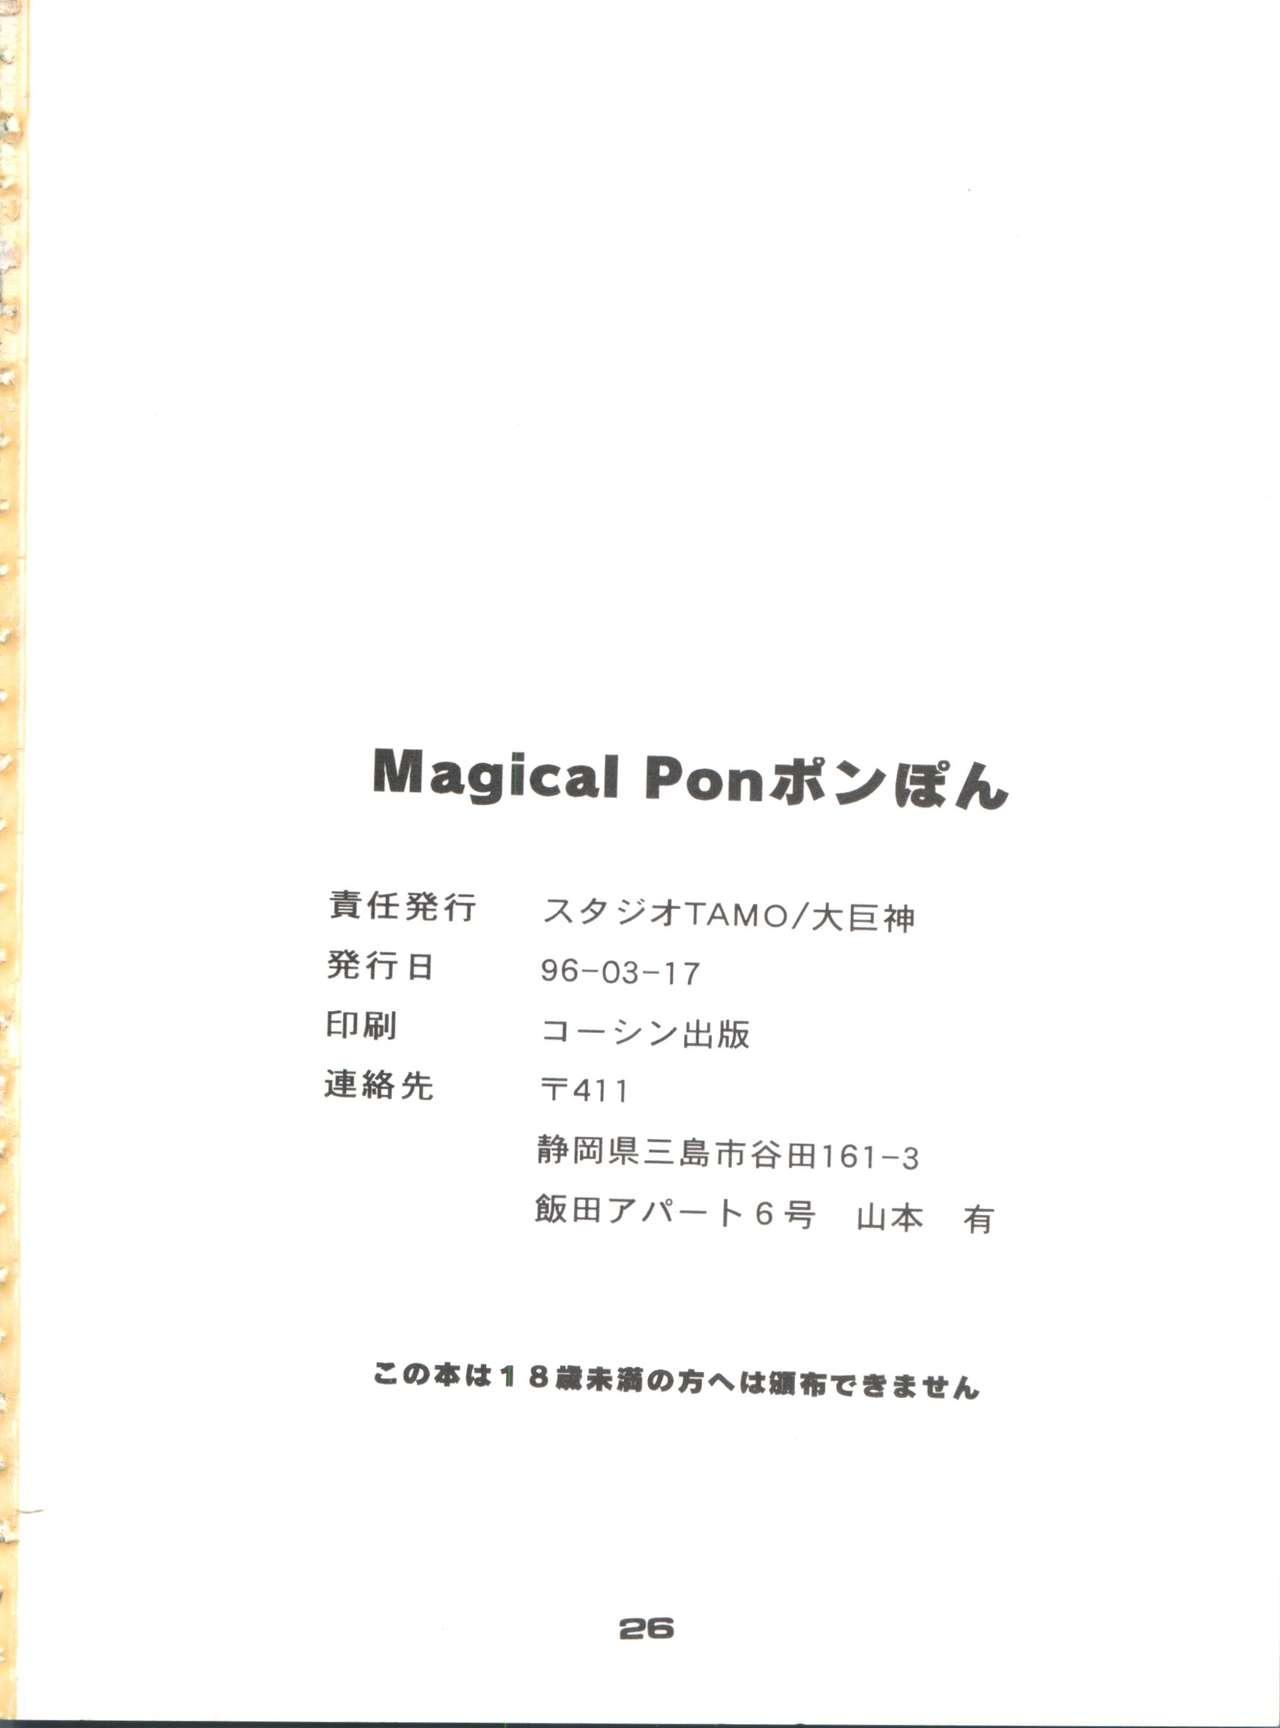 Magical Ponponpon Returns 24